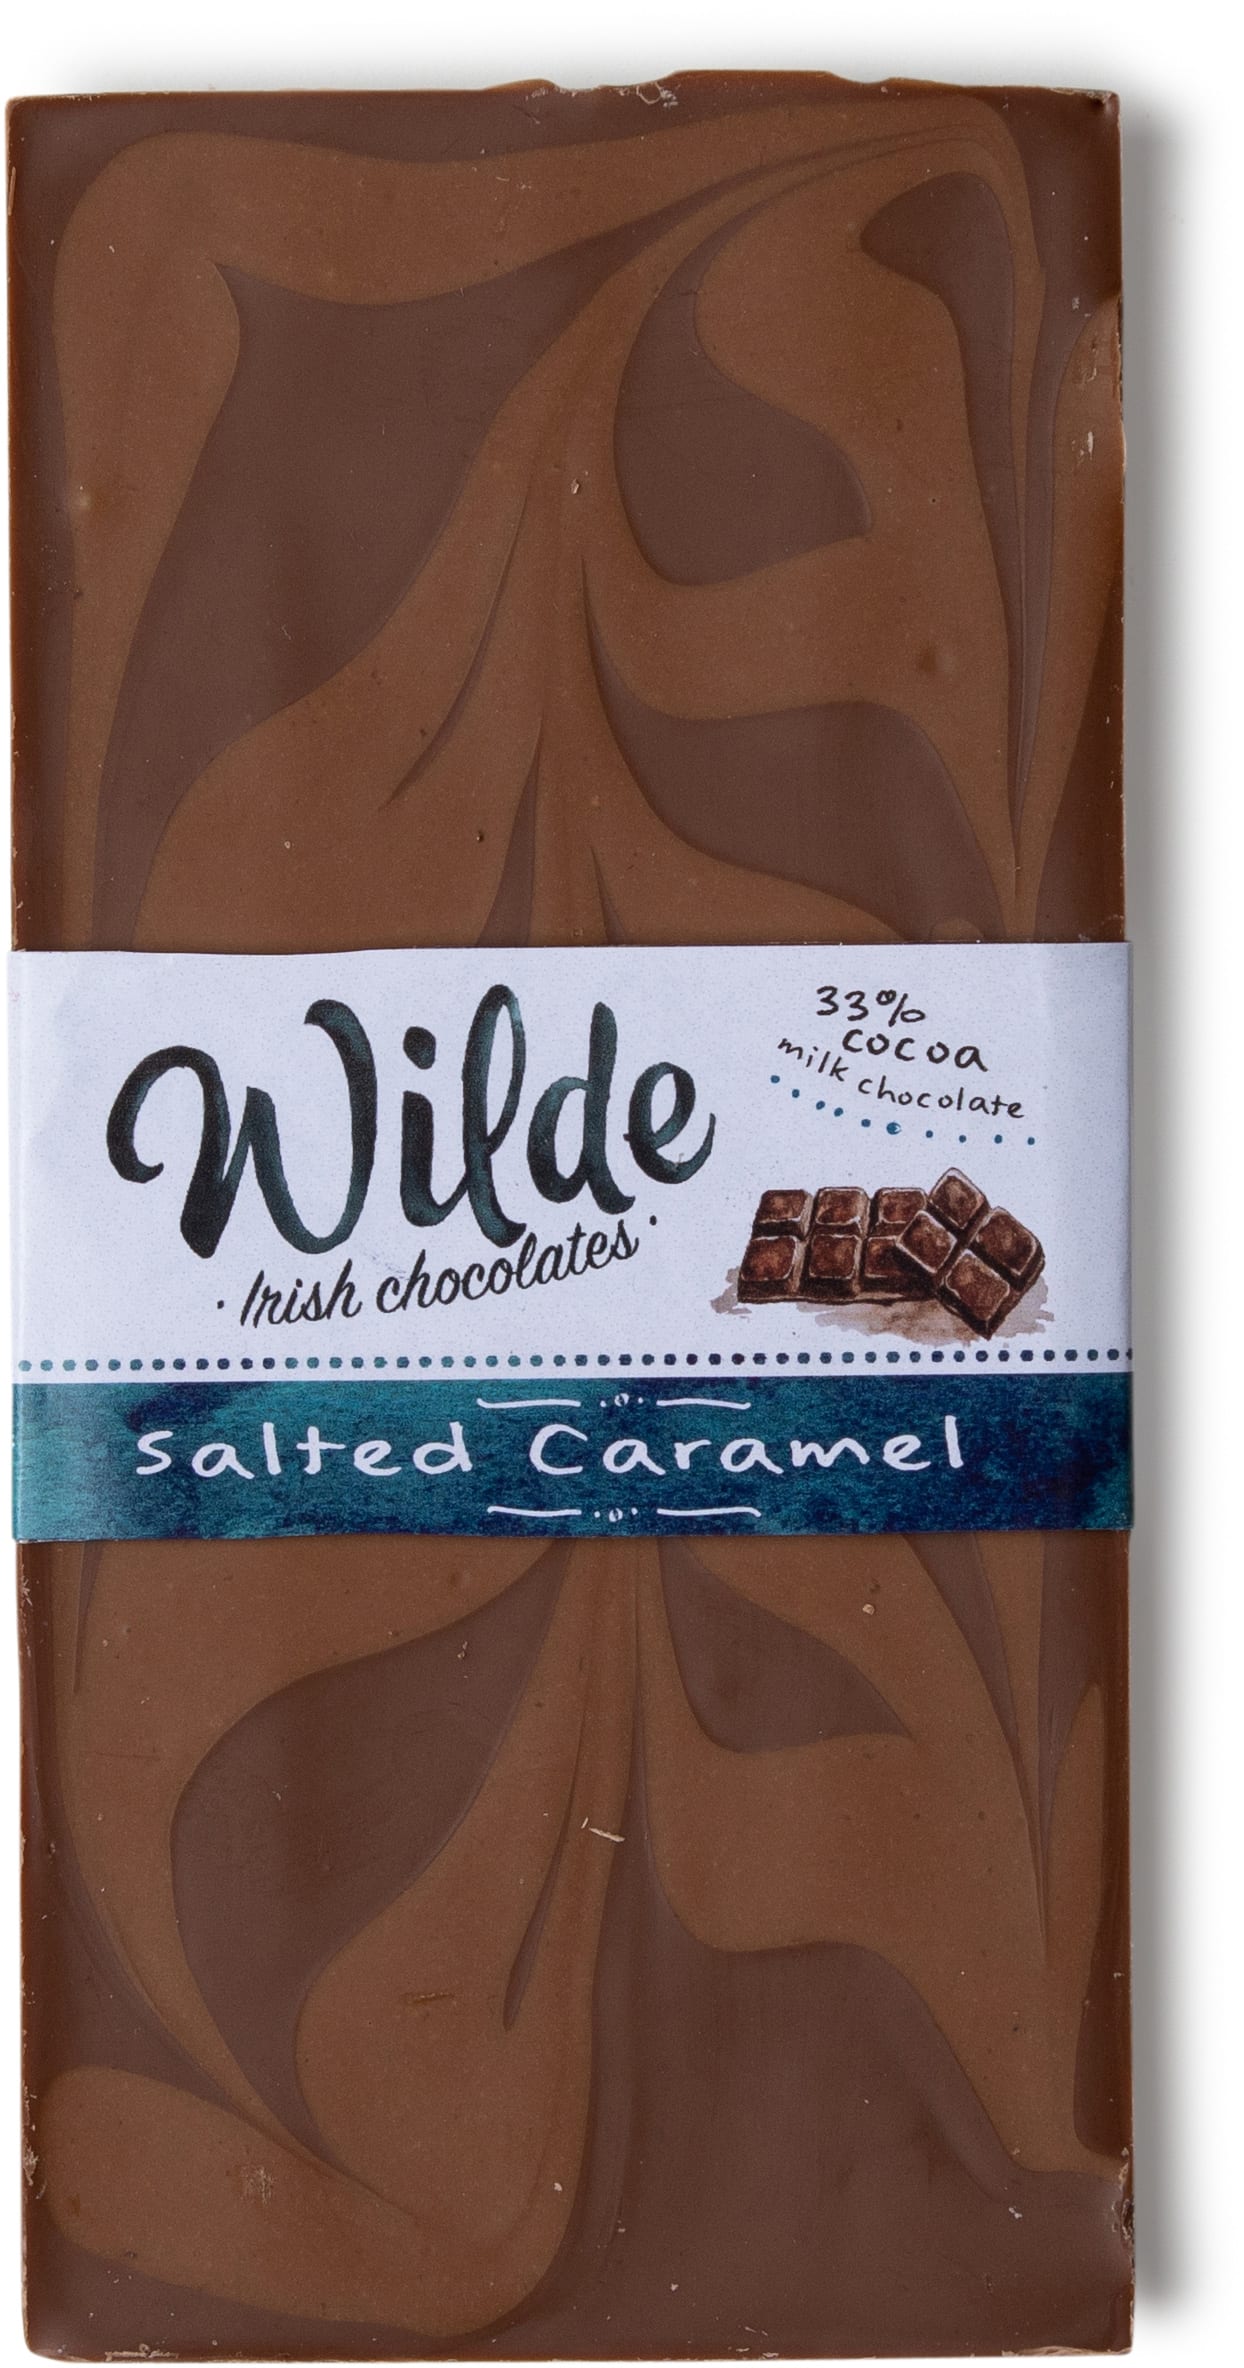 sated caramel chocolate bar - Wilde Irish Chocolates